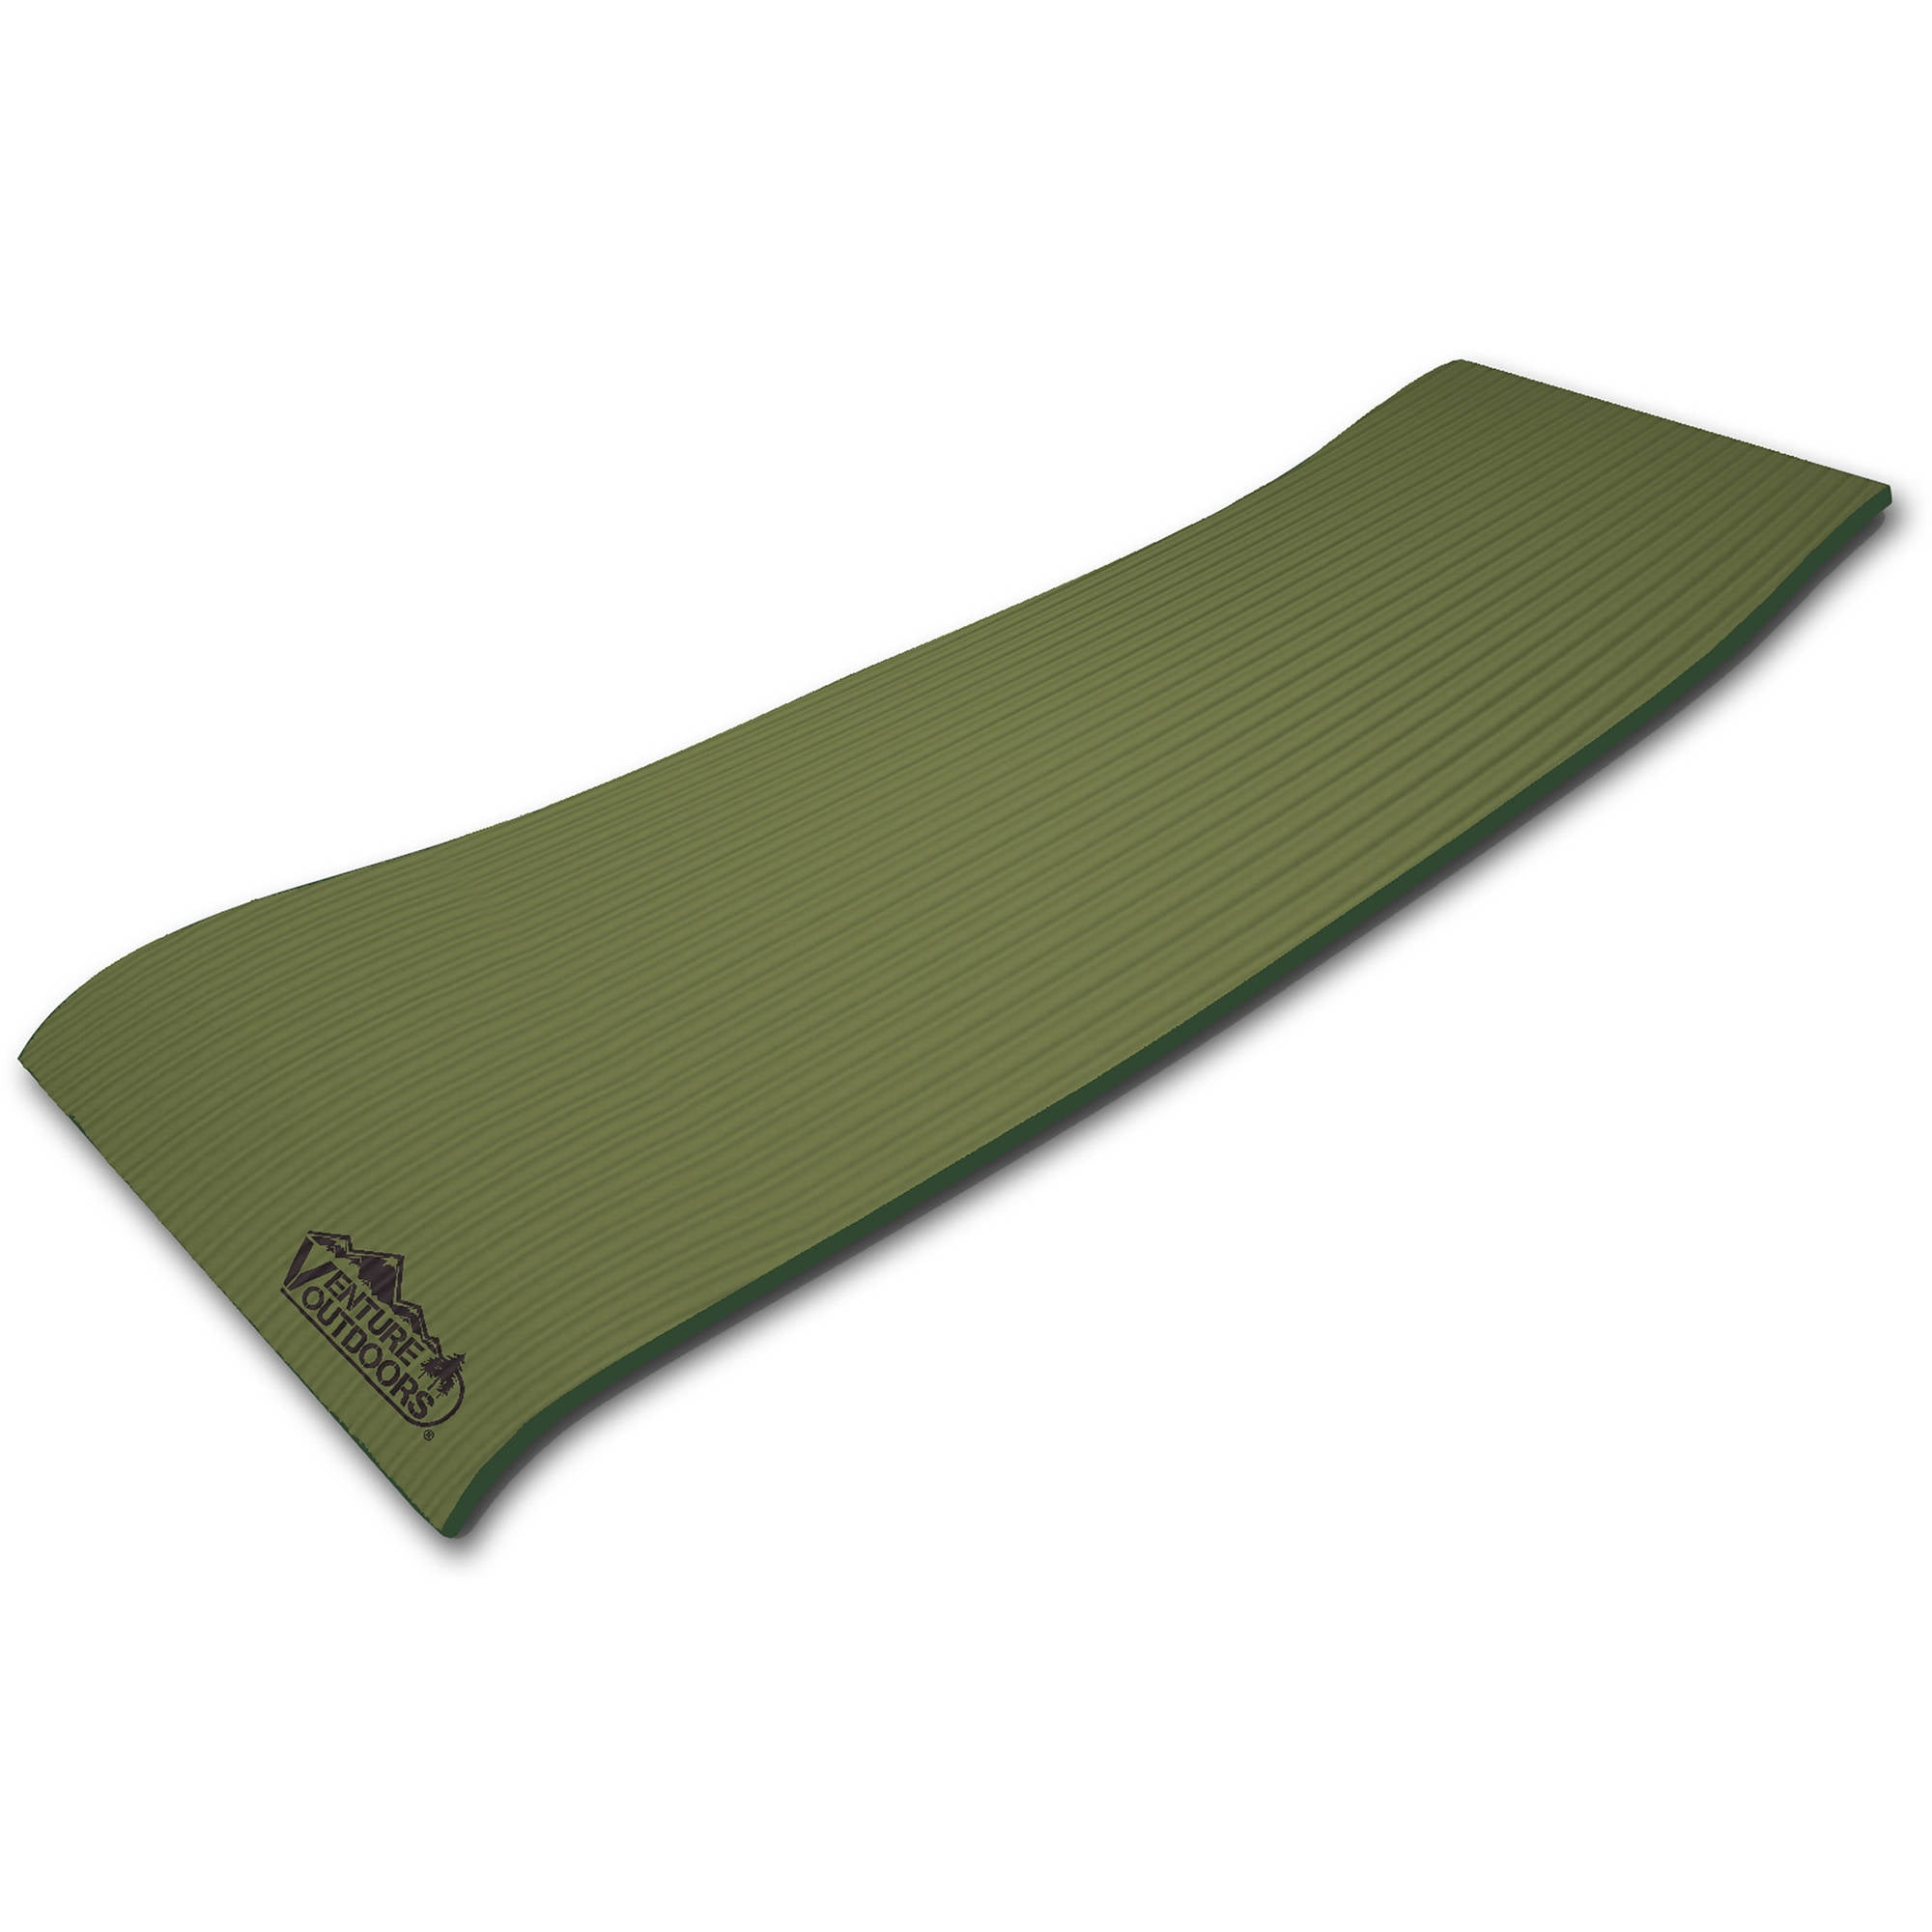 Camping Premium 4 Season Original Foam Sleeping Mat Multimat Backpacker 9 